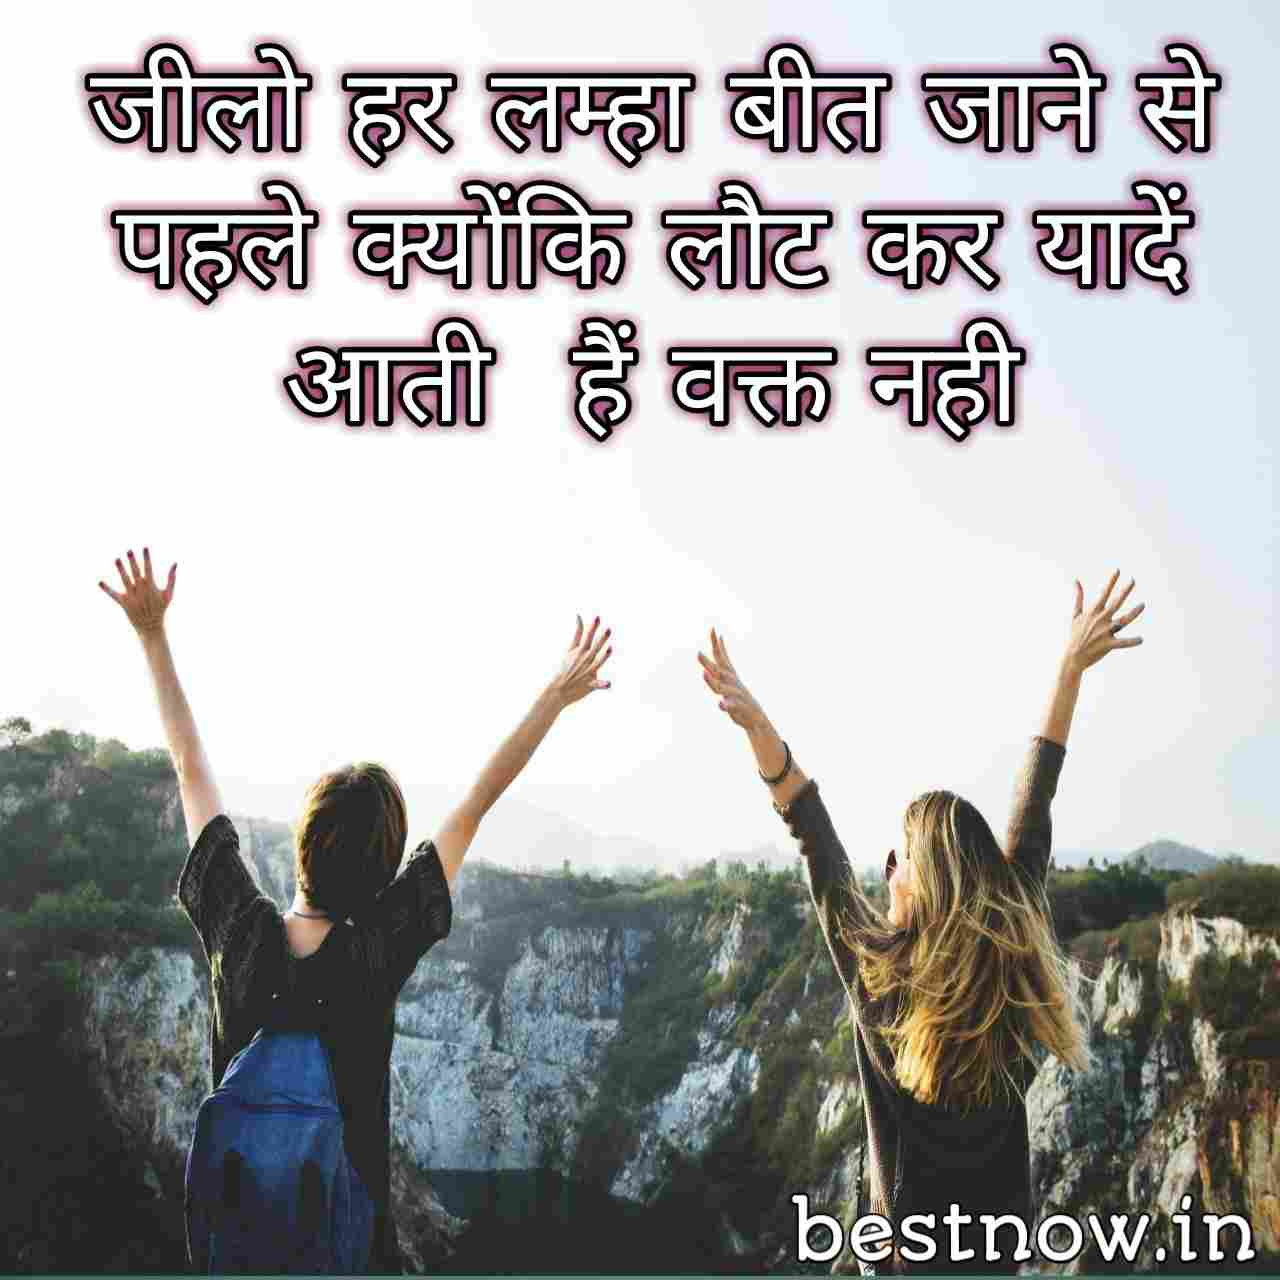 Hindi suvichar on life